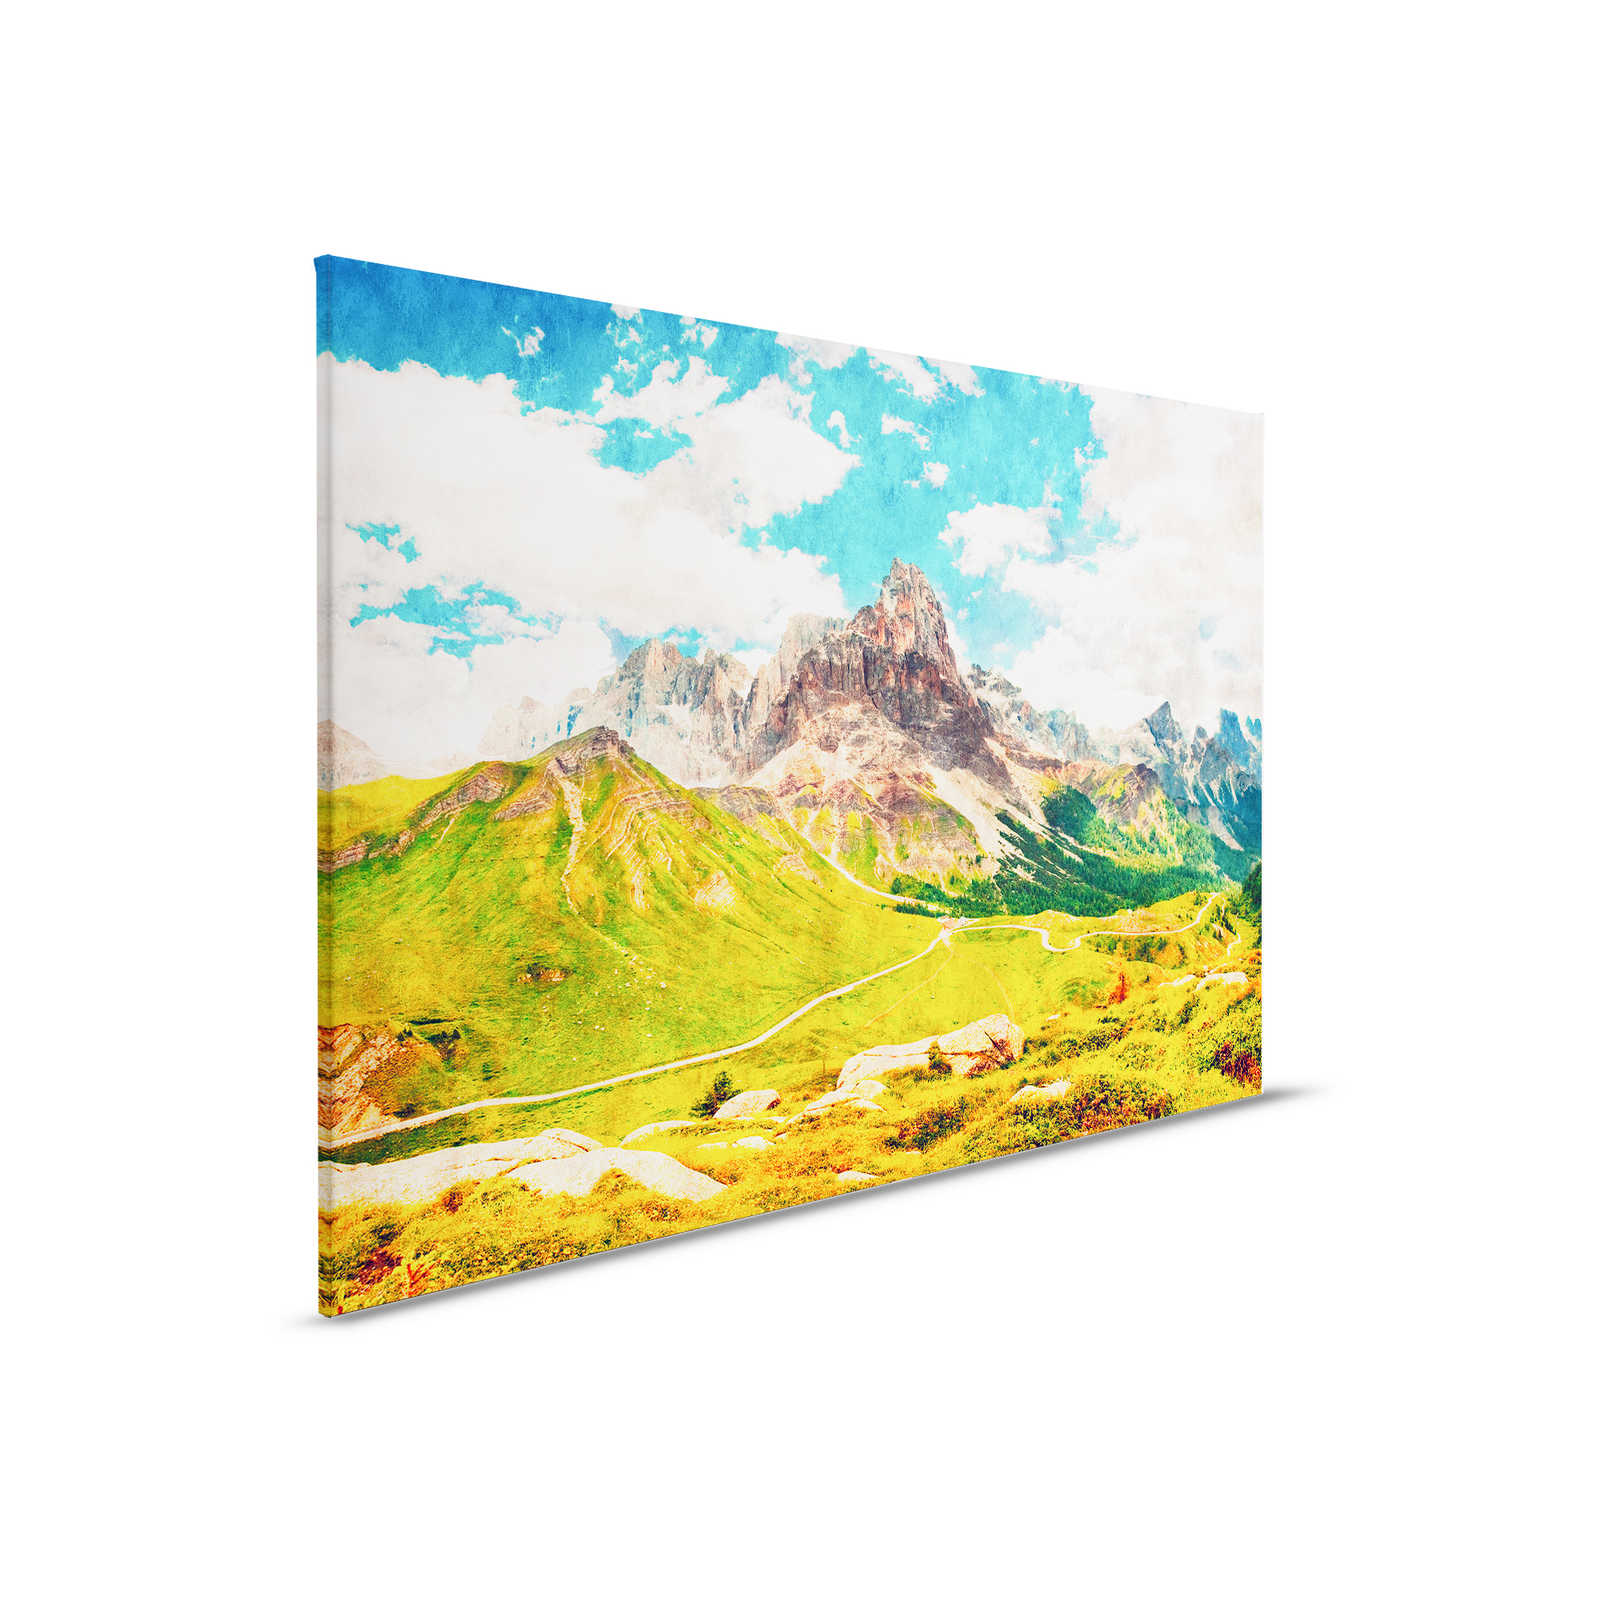         Dolomiti 1 - Canvas painting Dolomites Retro Photography - Blotting paper - 0.90 m x 0.60 m
    